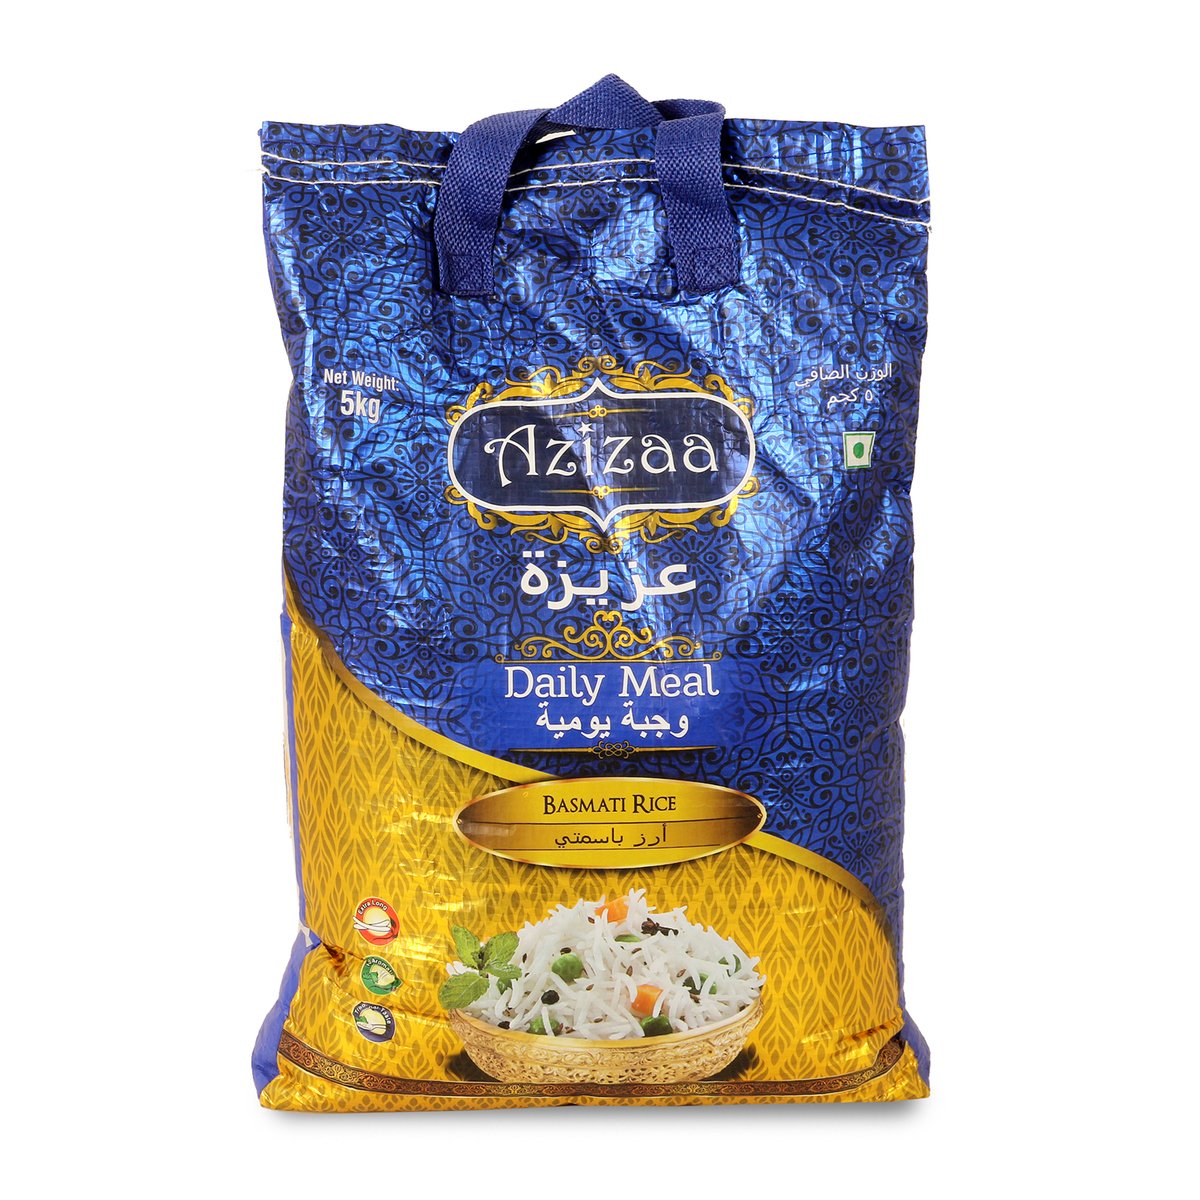 Azizaa Daily Meal Basmati Rice 5kg